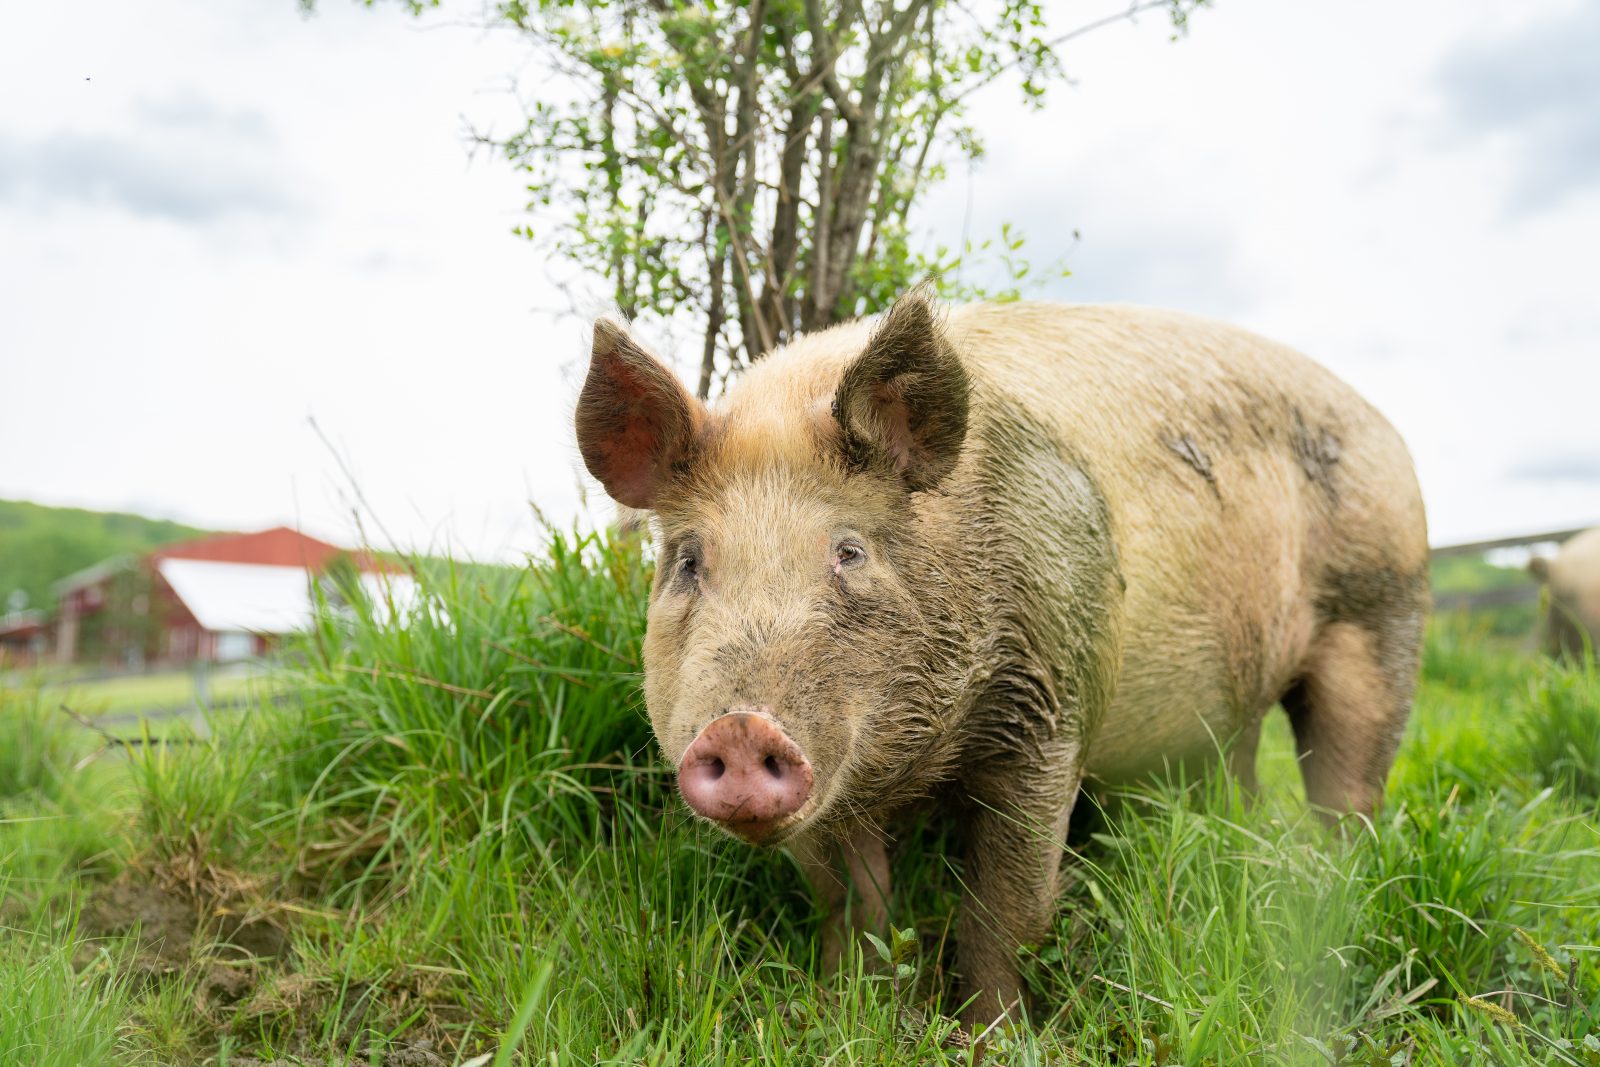 Jack pig walks through the grass at Farm Sanctuary